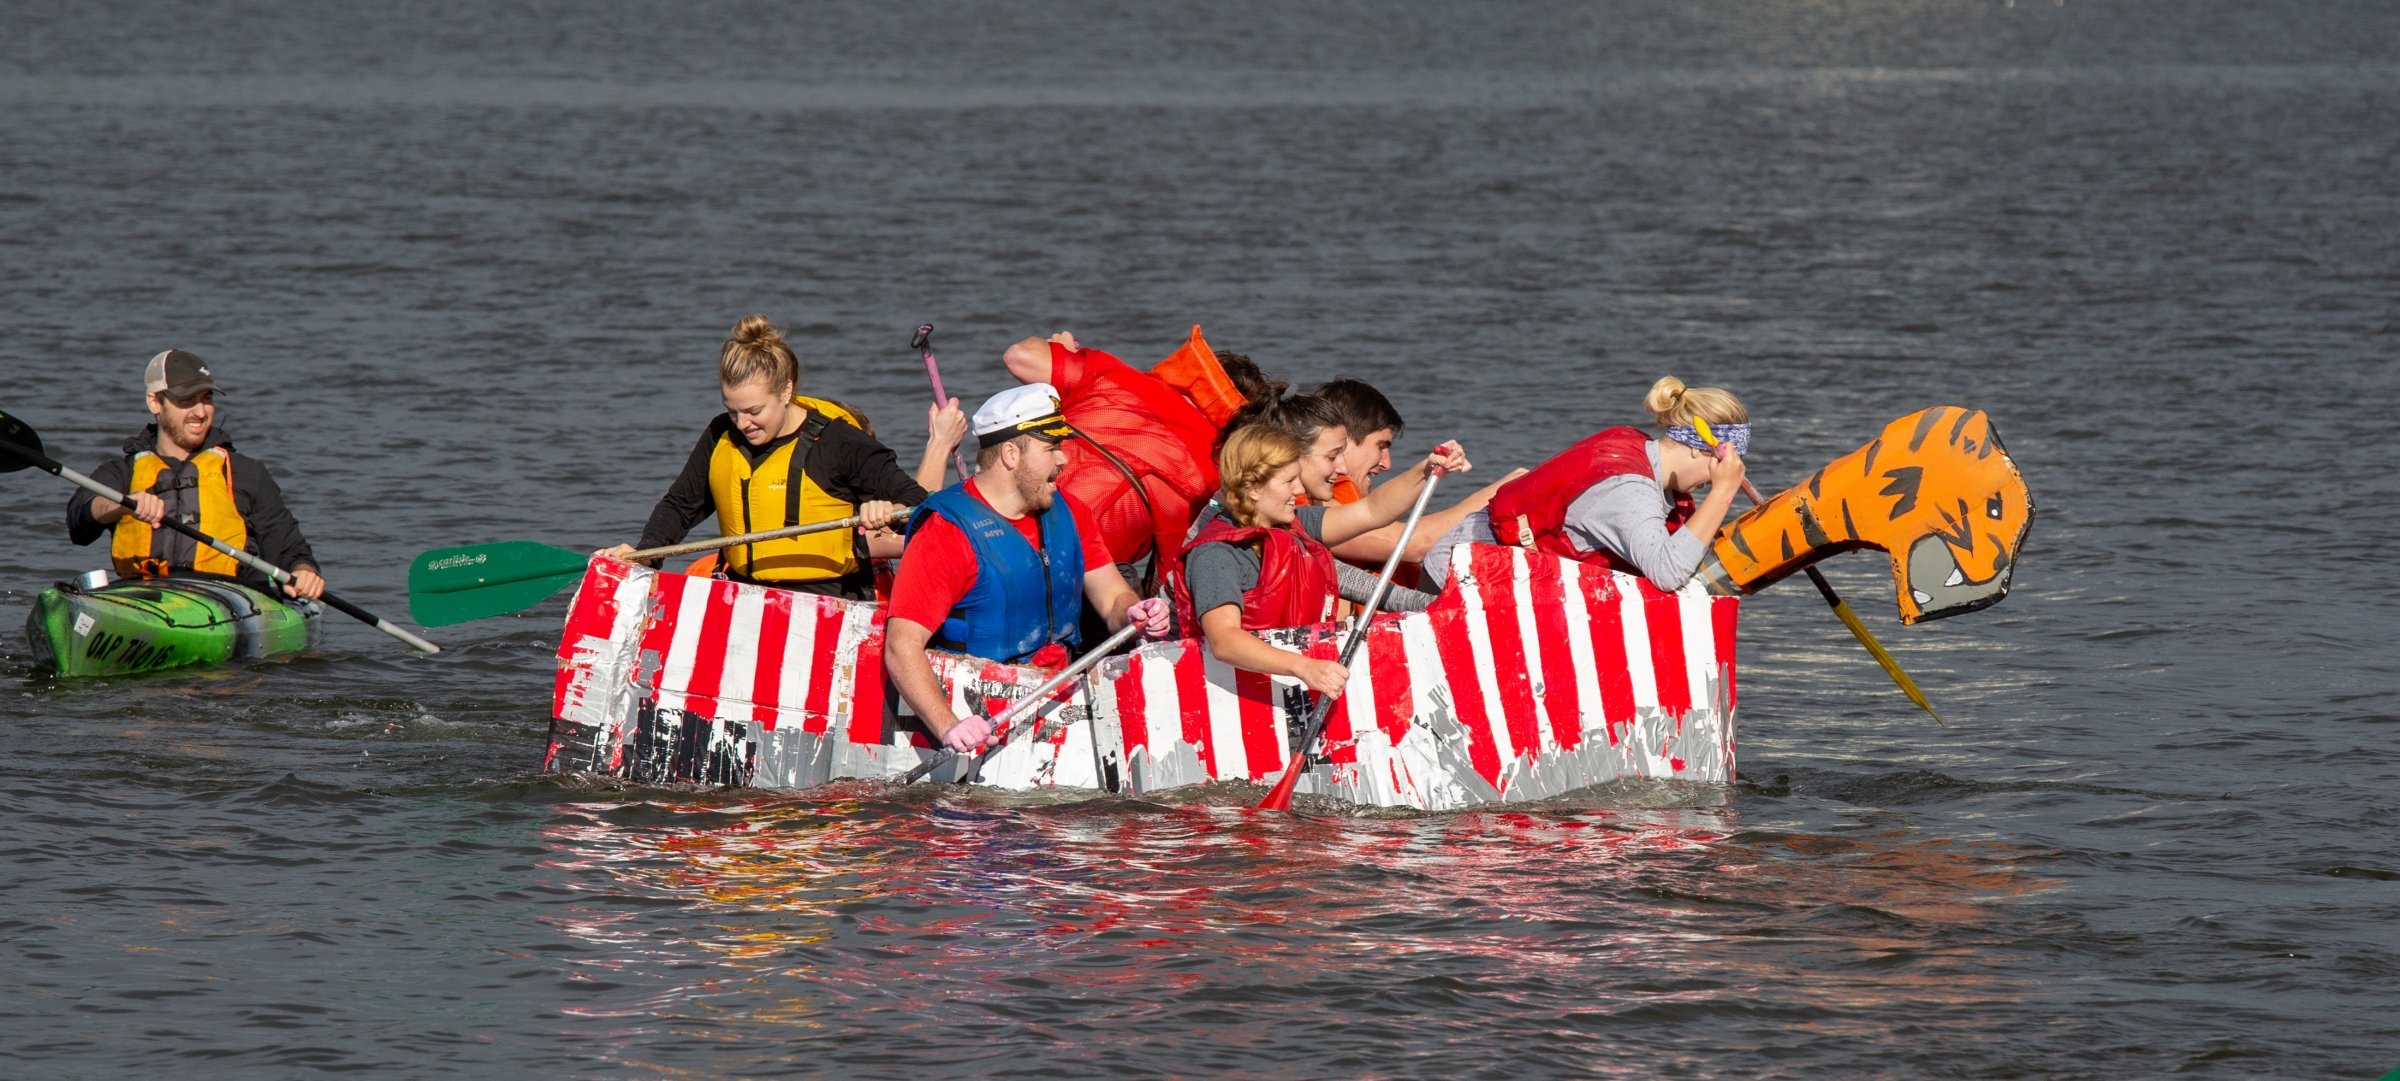 Students paddling a cardboard boat